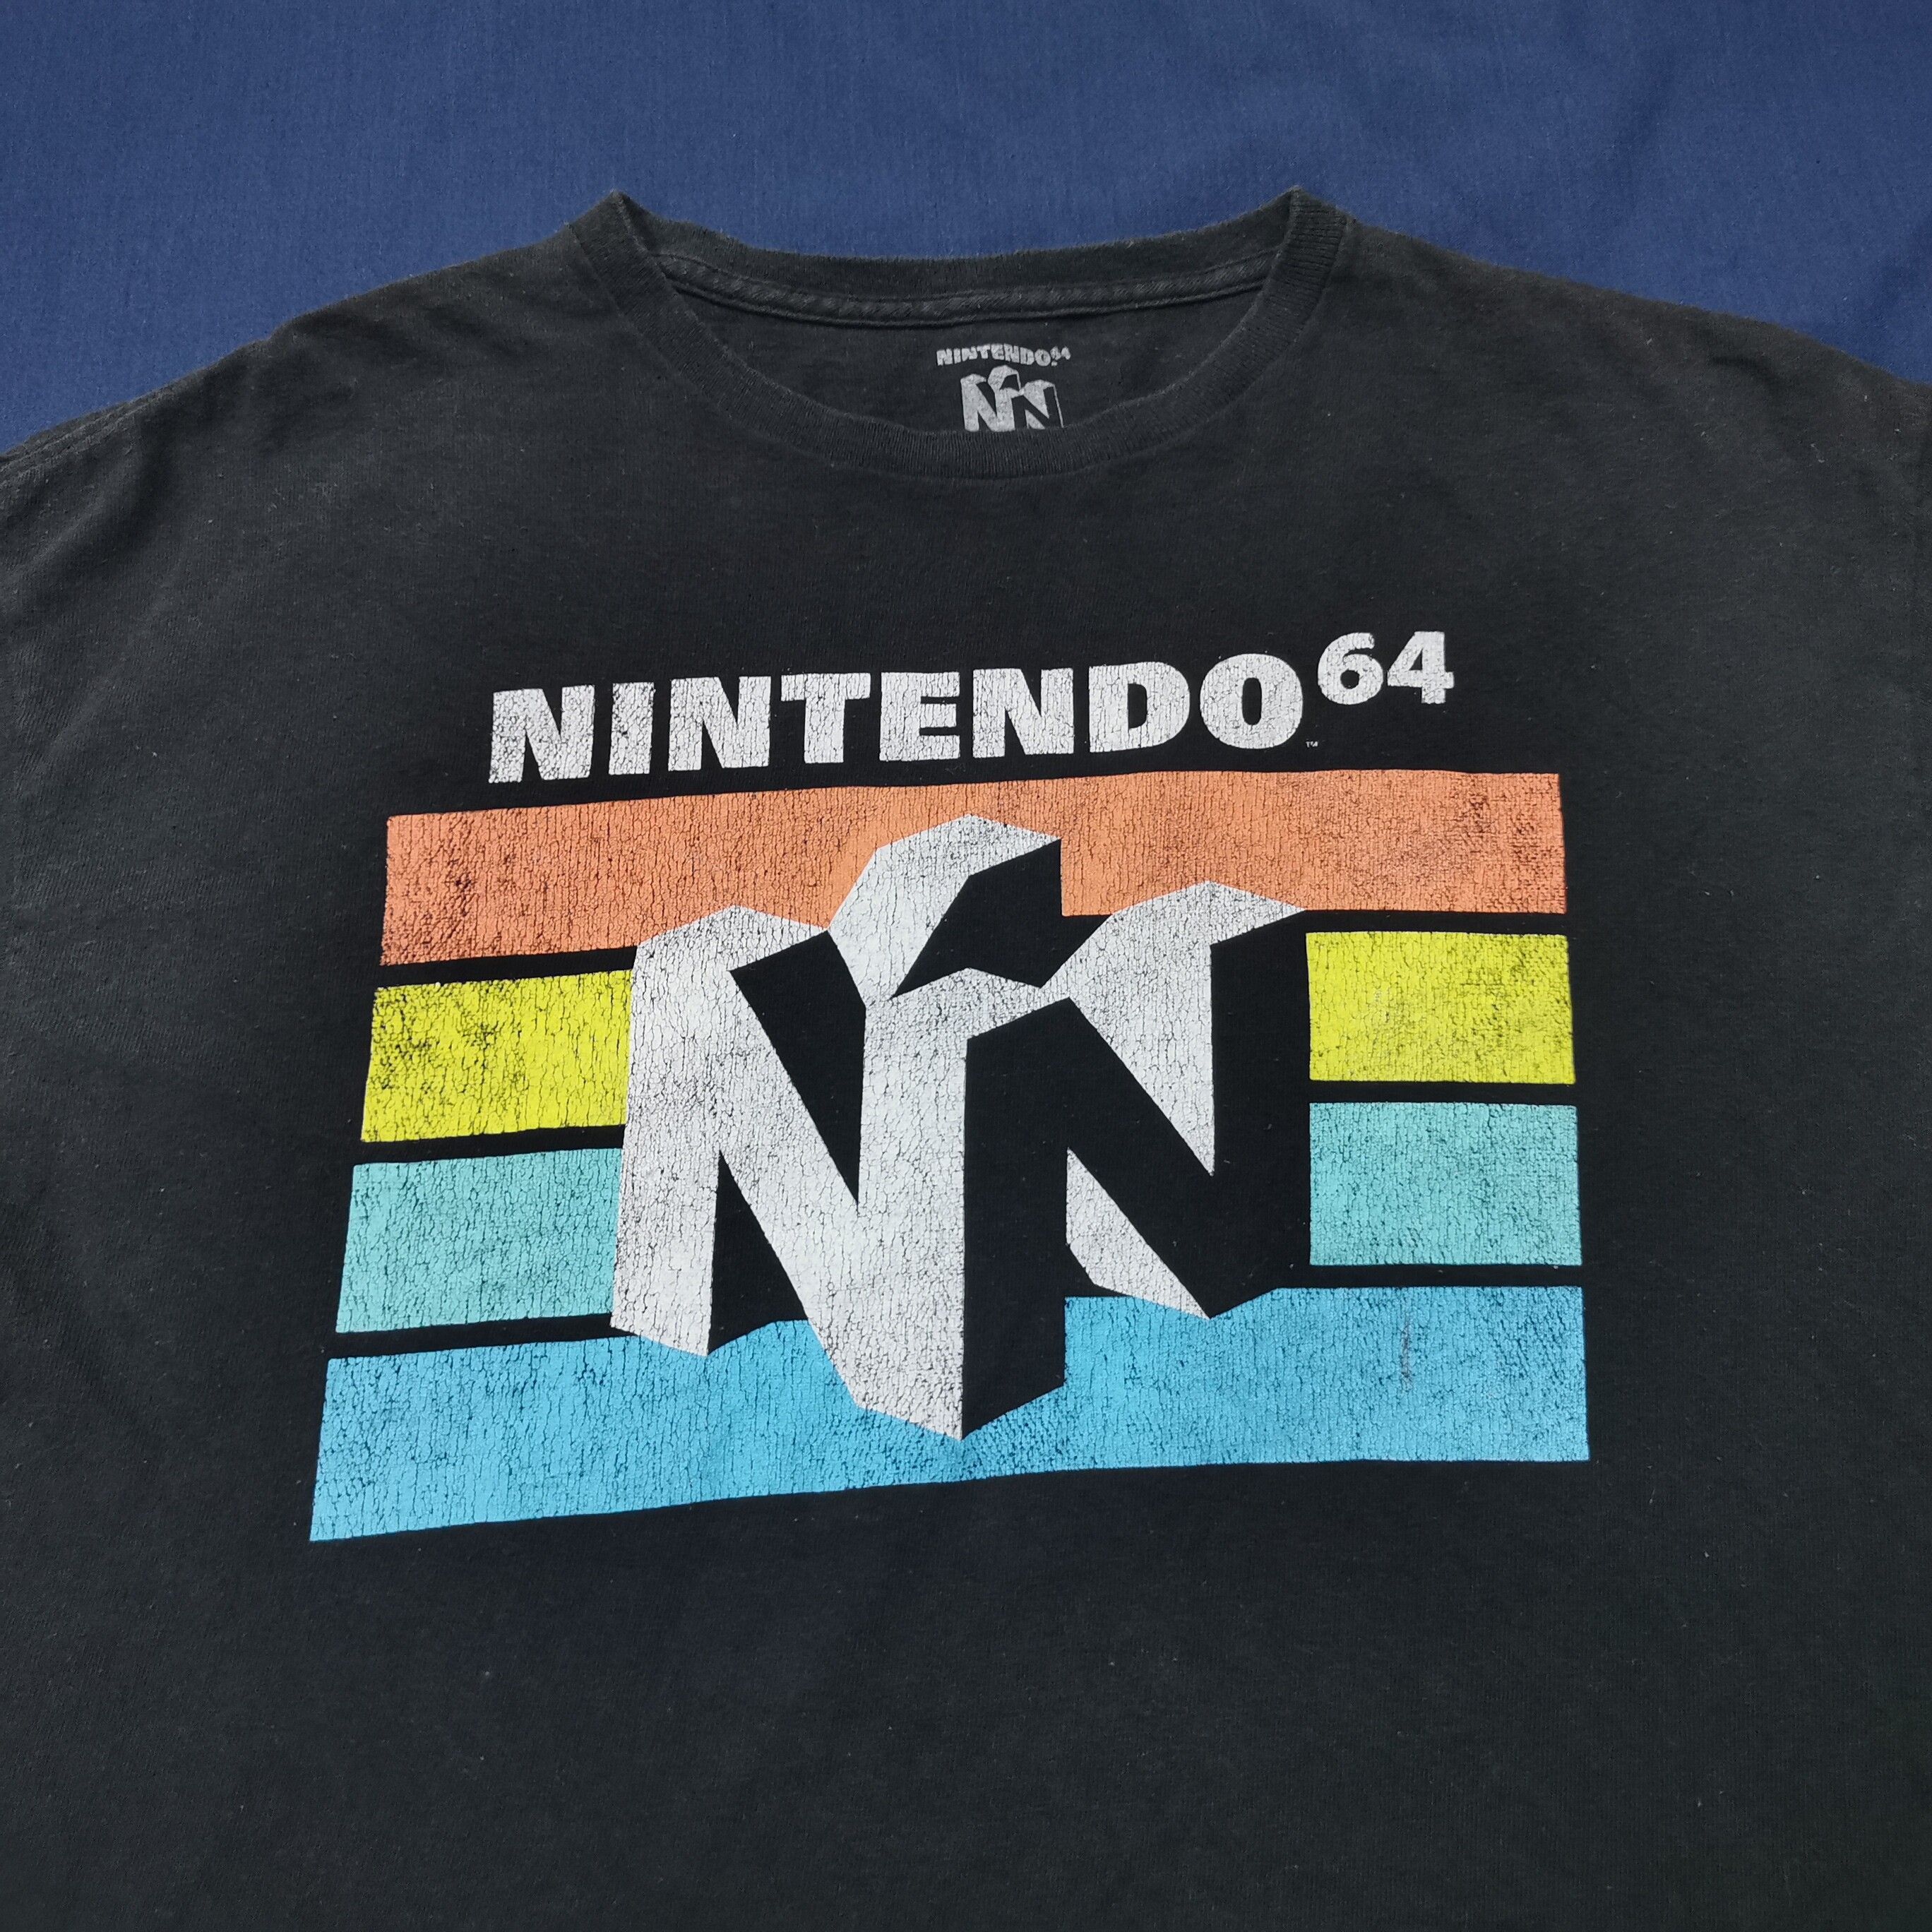 The Game - Classic Nintendo 64 Game T-shirt - 3